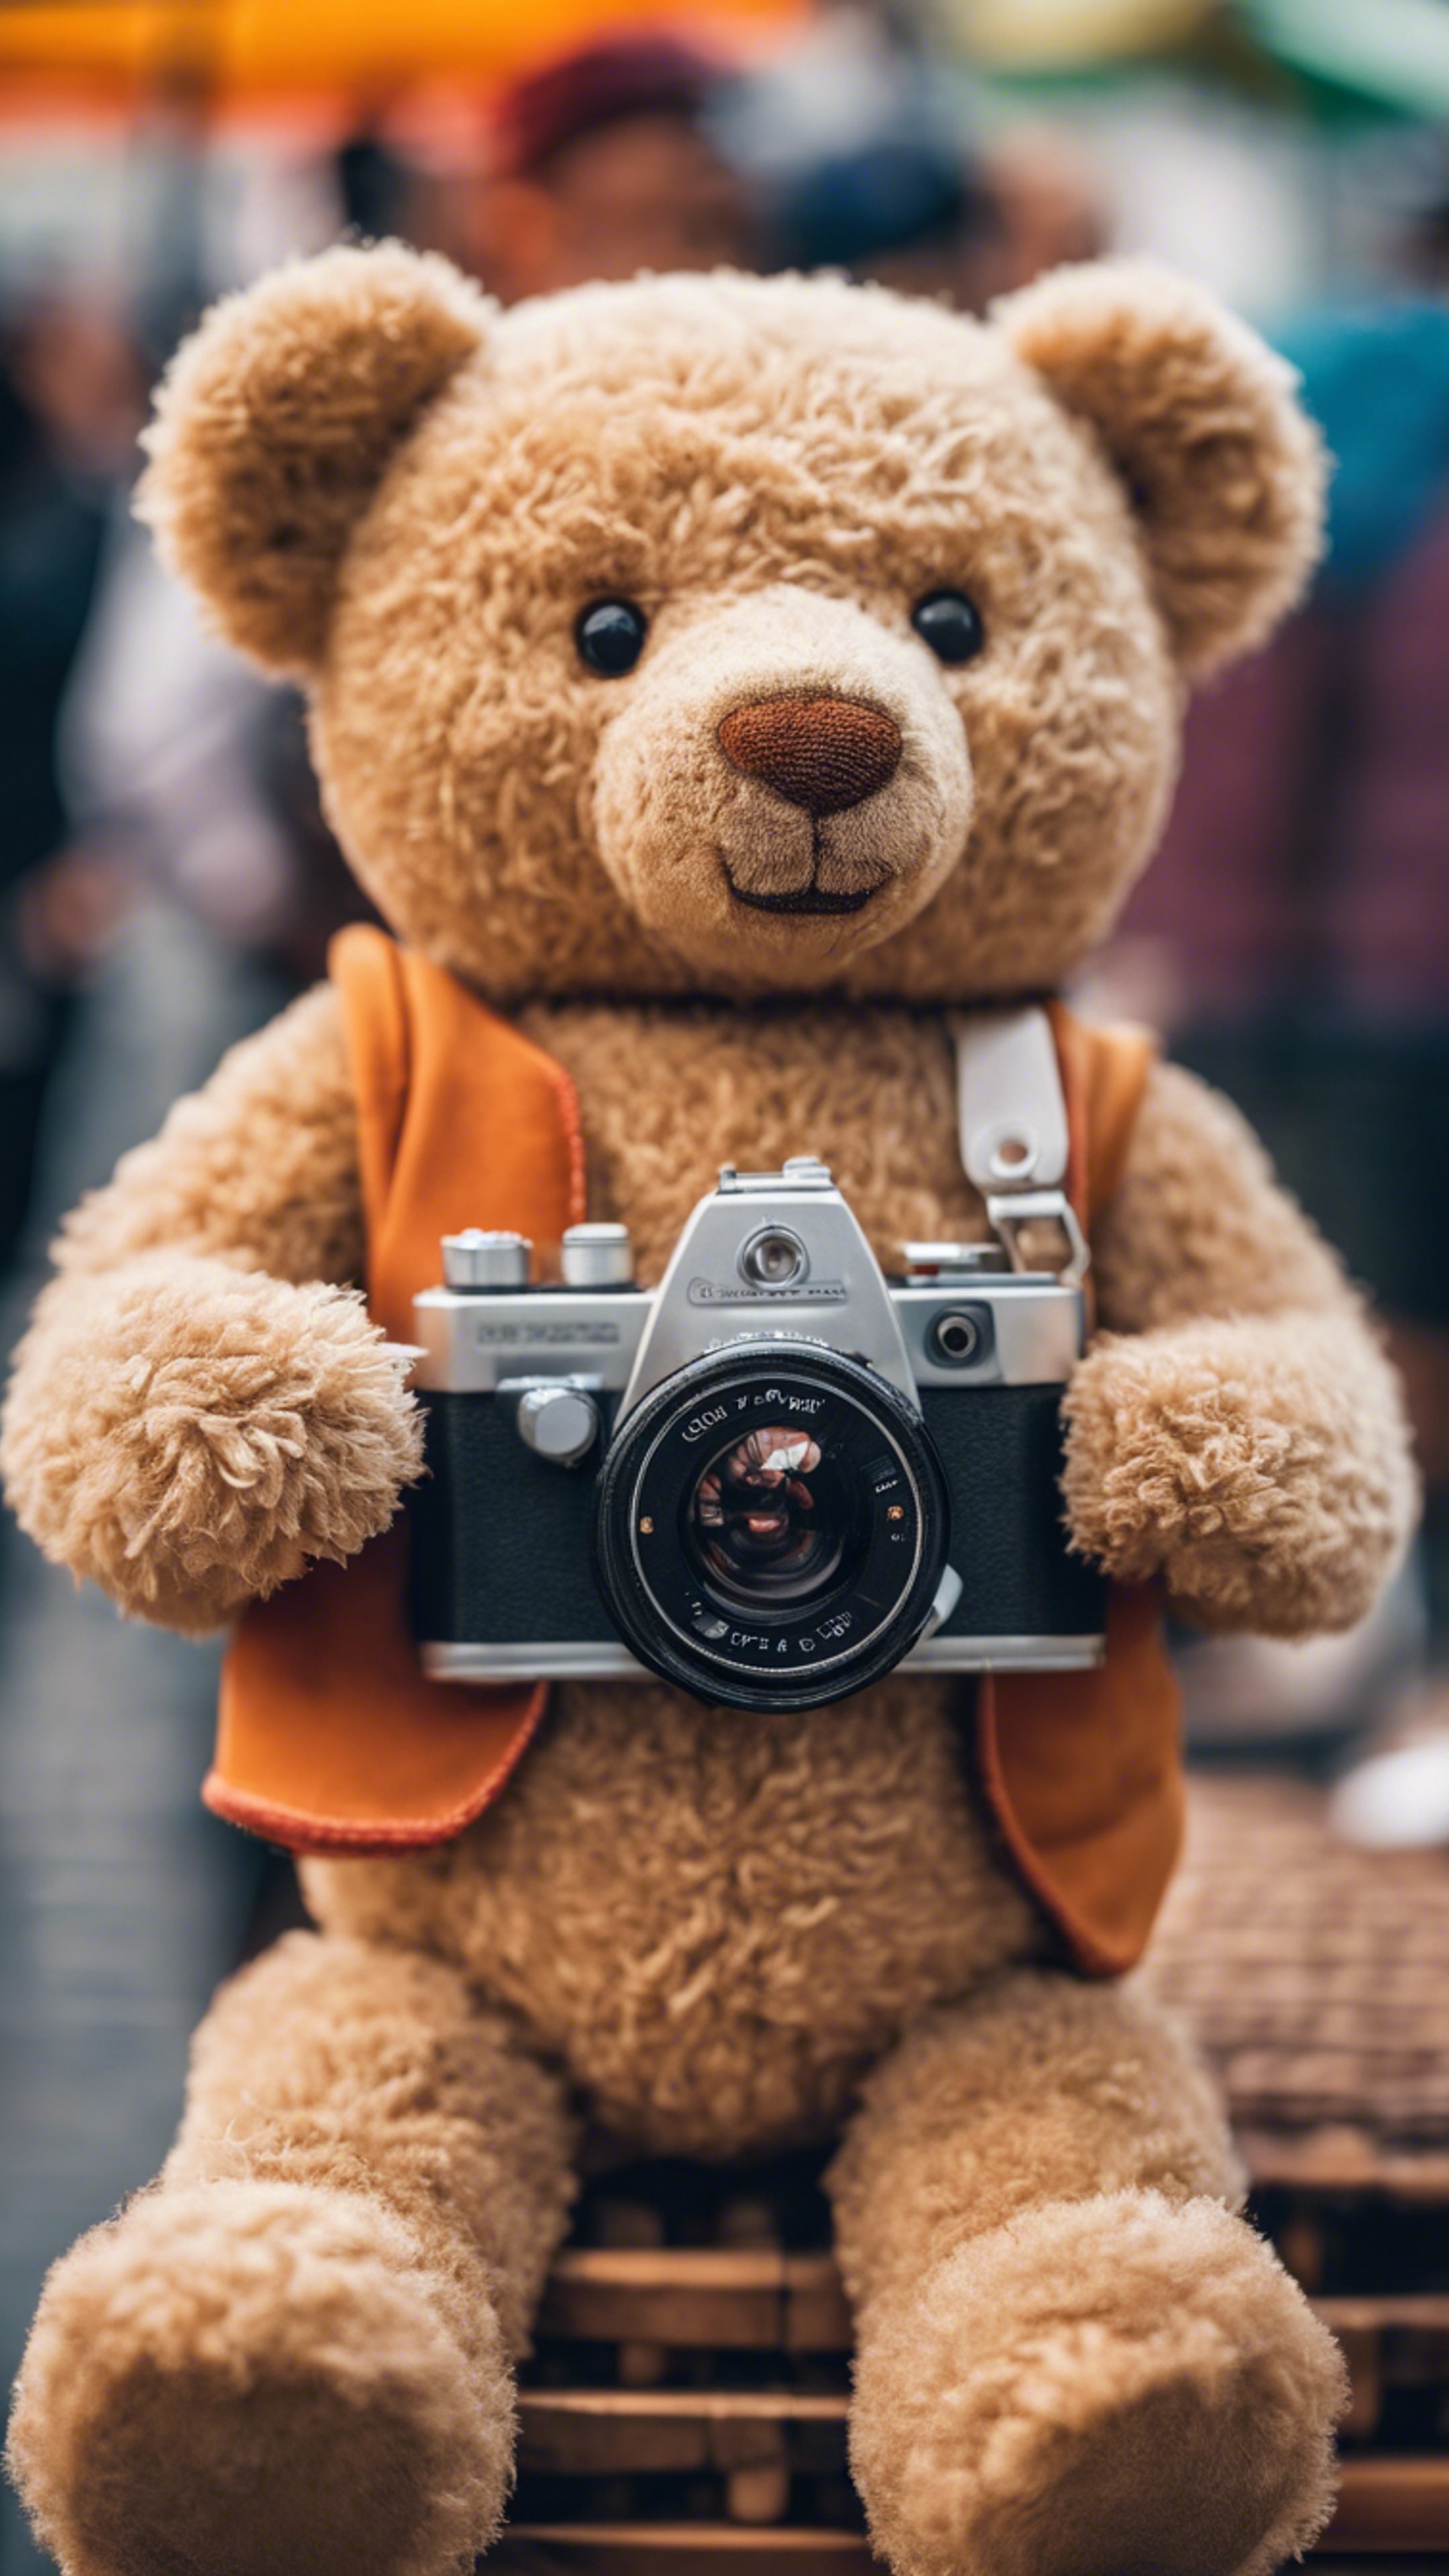 A teddy bear photography hobbyist, holding a toy camera, stood amidst a vibrant street fair. Hintergrund[6bbb7c06ef4c4008bbb6]